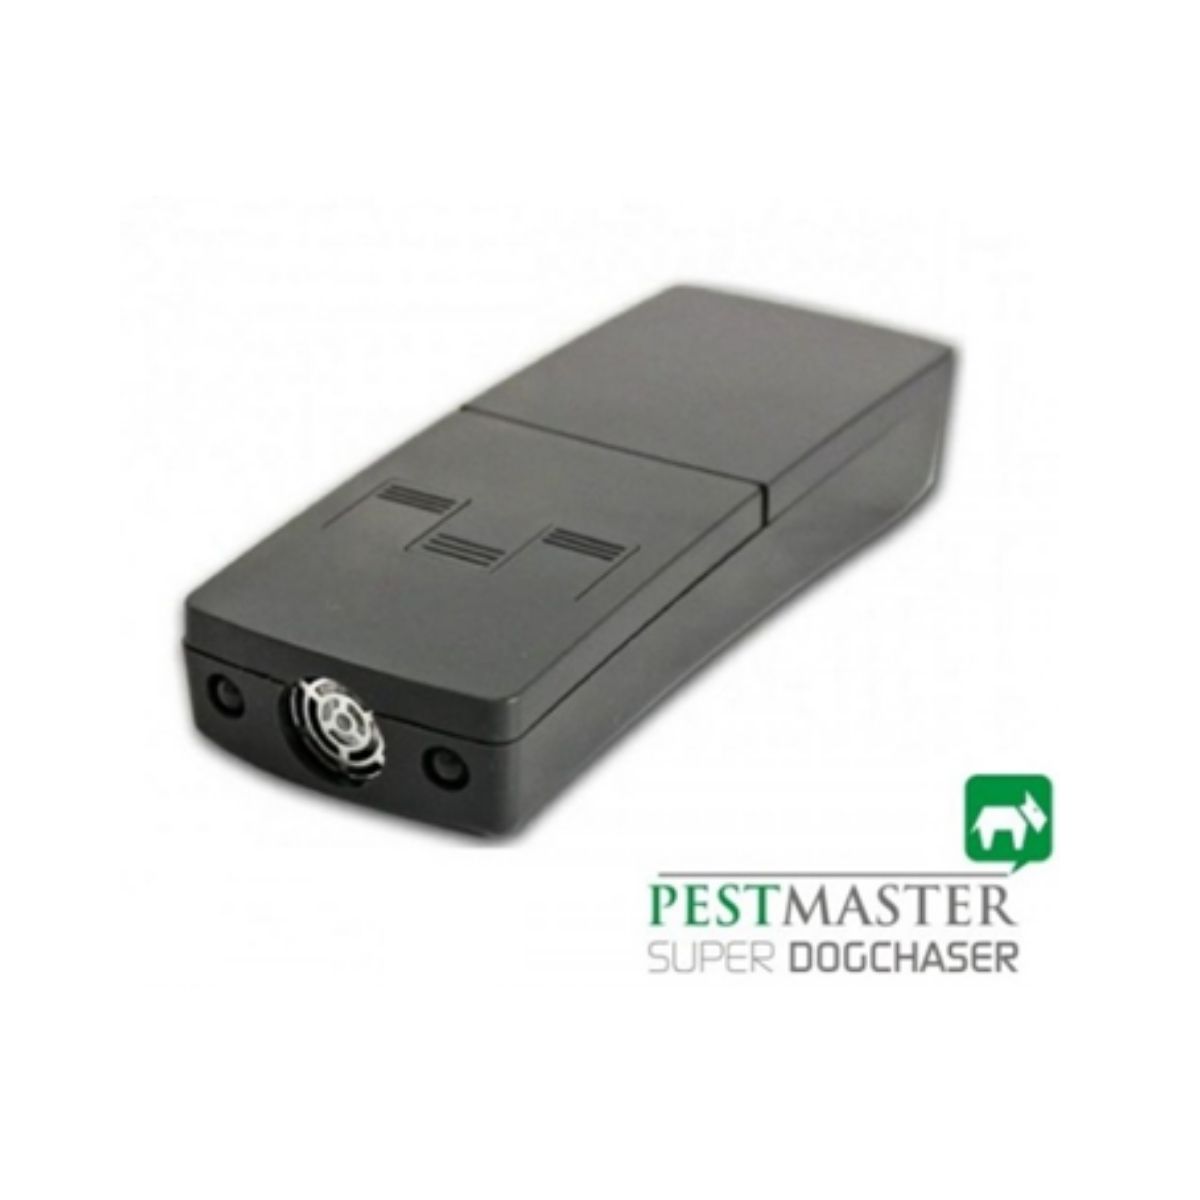 Aparate si dispozitive - Dispozitiv electronic PestMaster Superdog Chaser portabil Ultrasunete, hectarul.ro